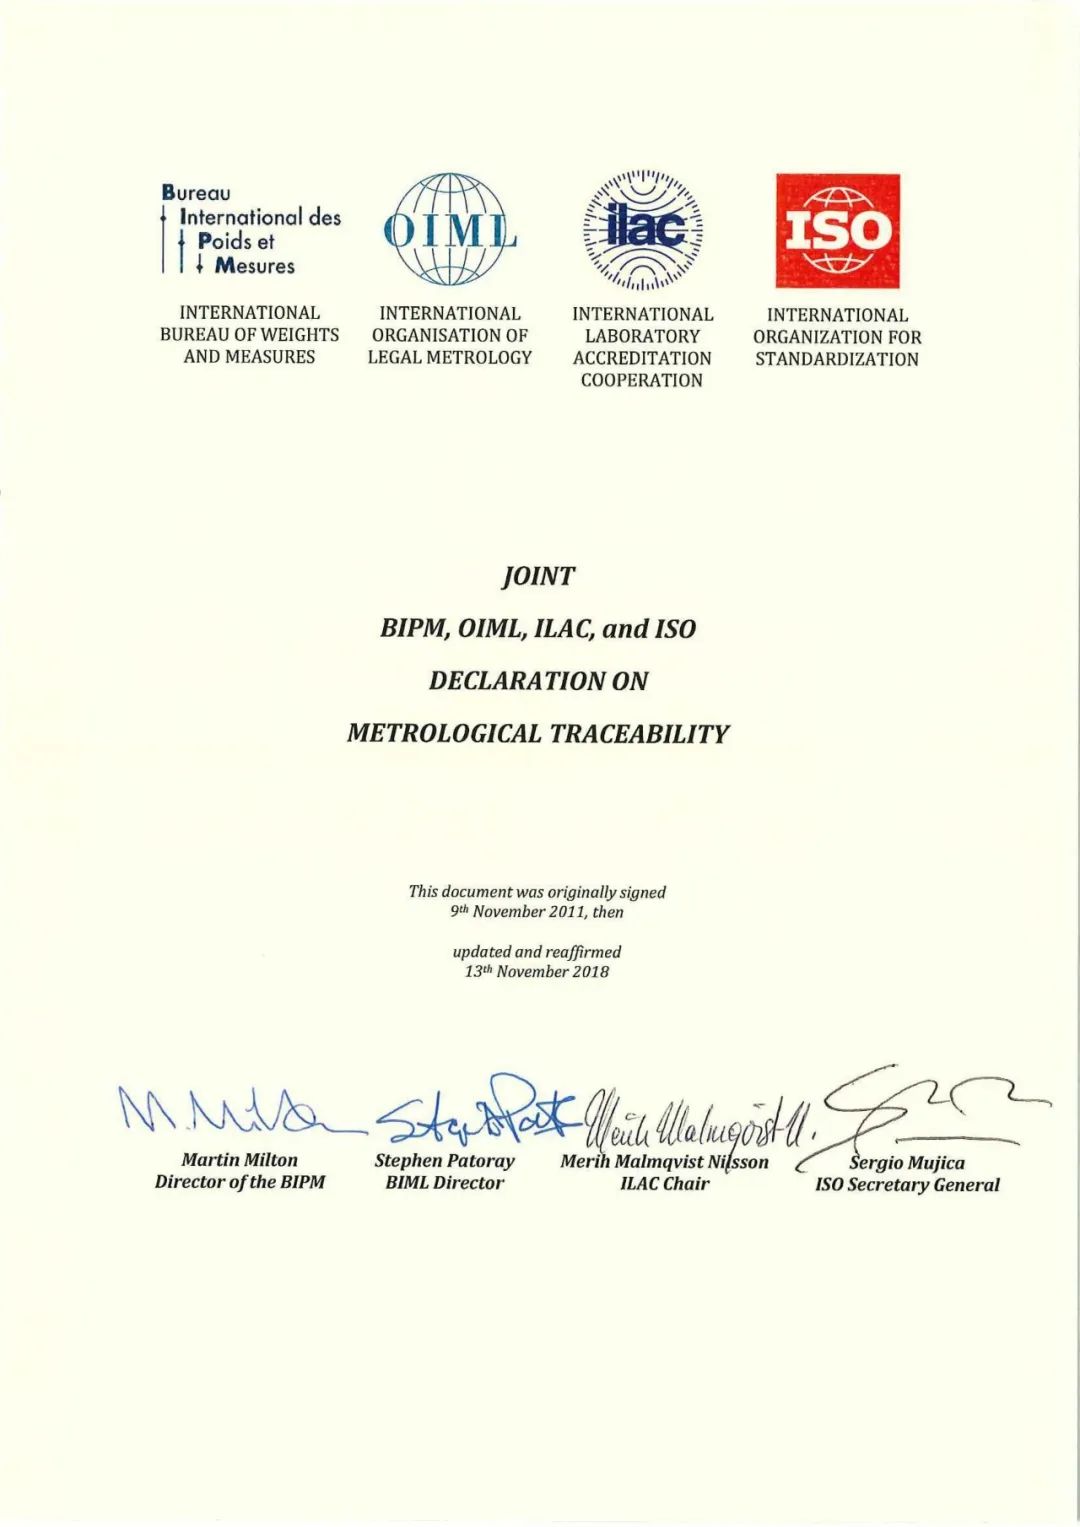 BIPM, OIML, ILAC, ISO关于计量溯源性的联合声明